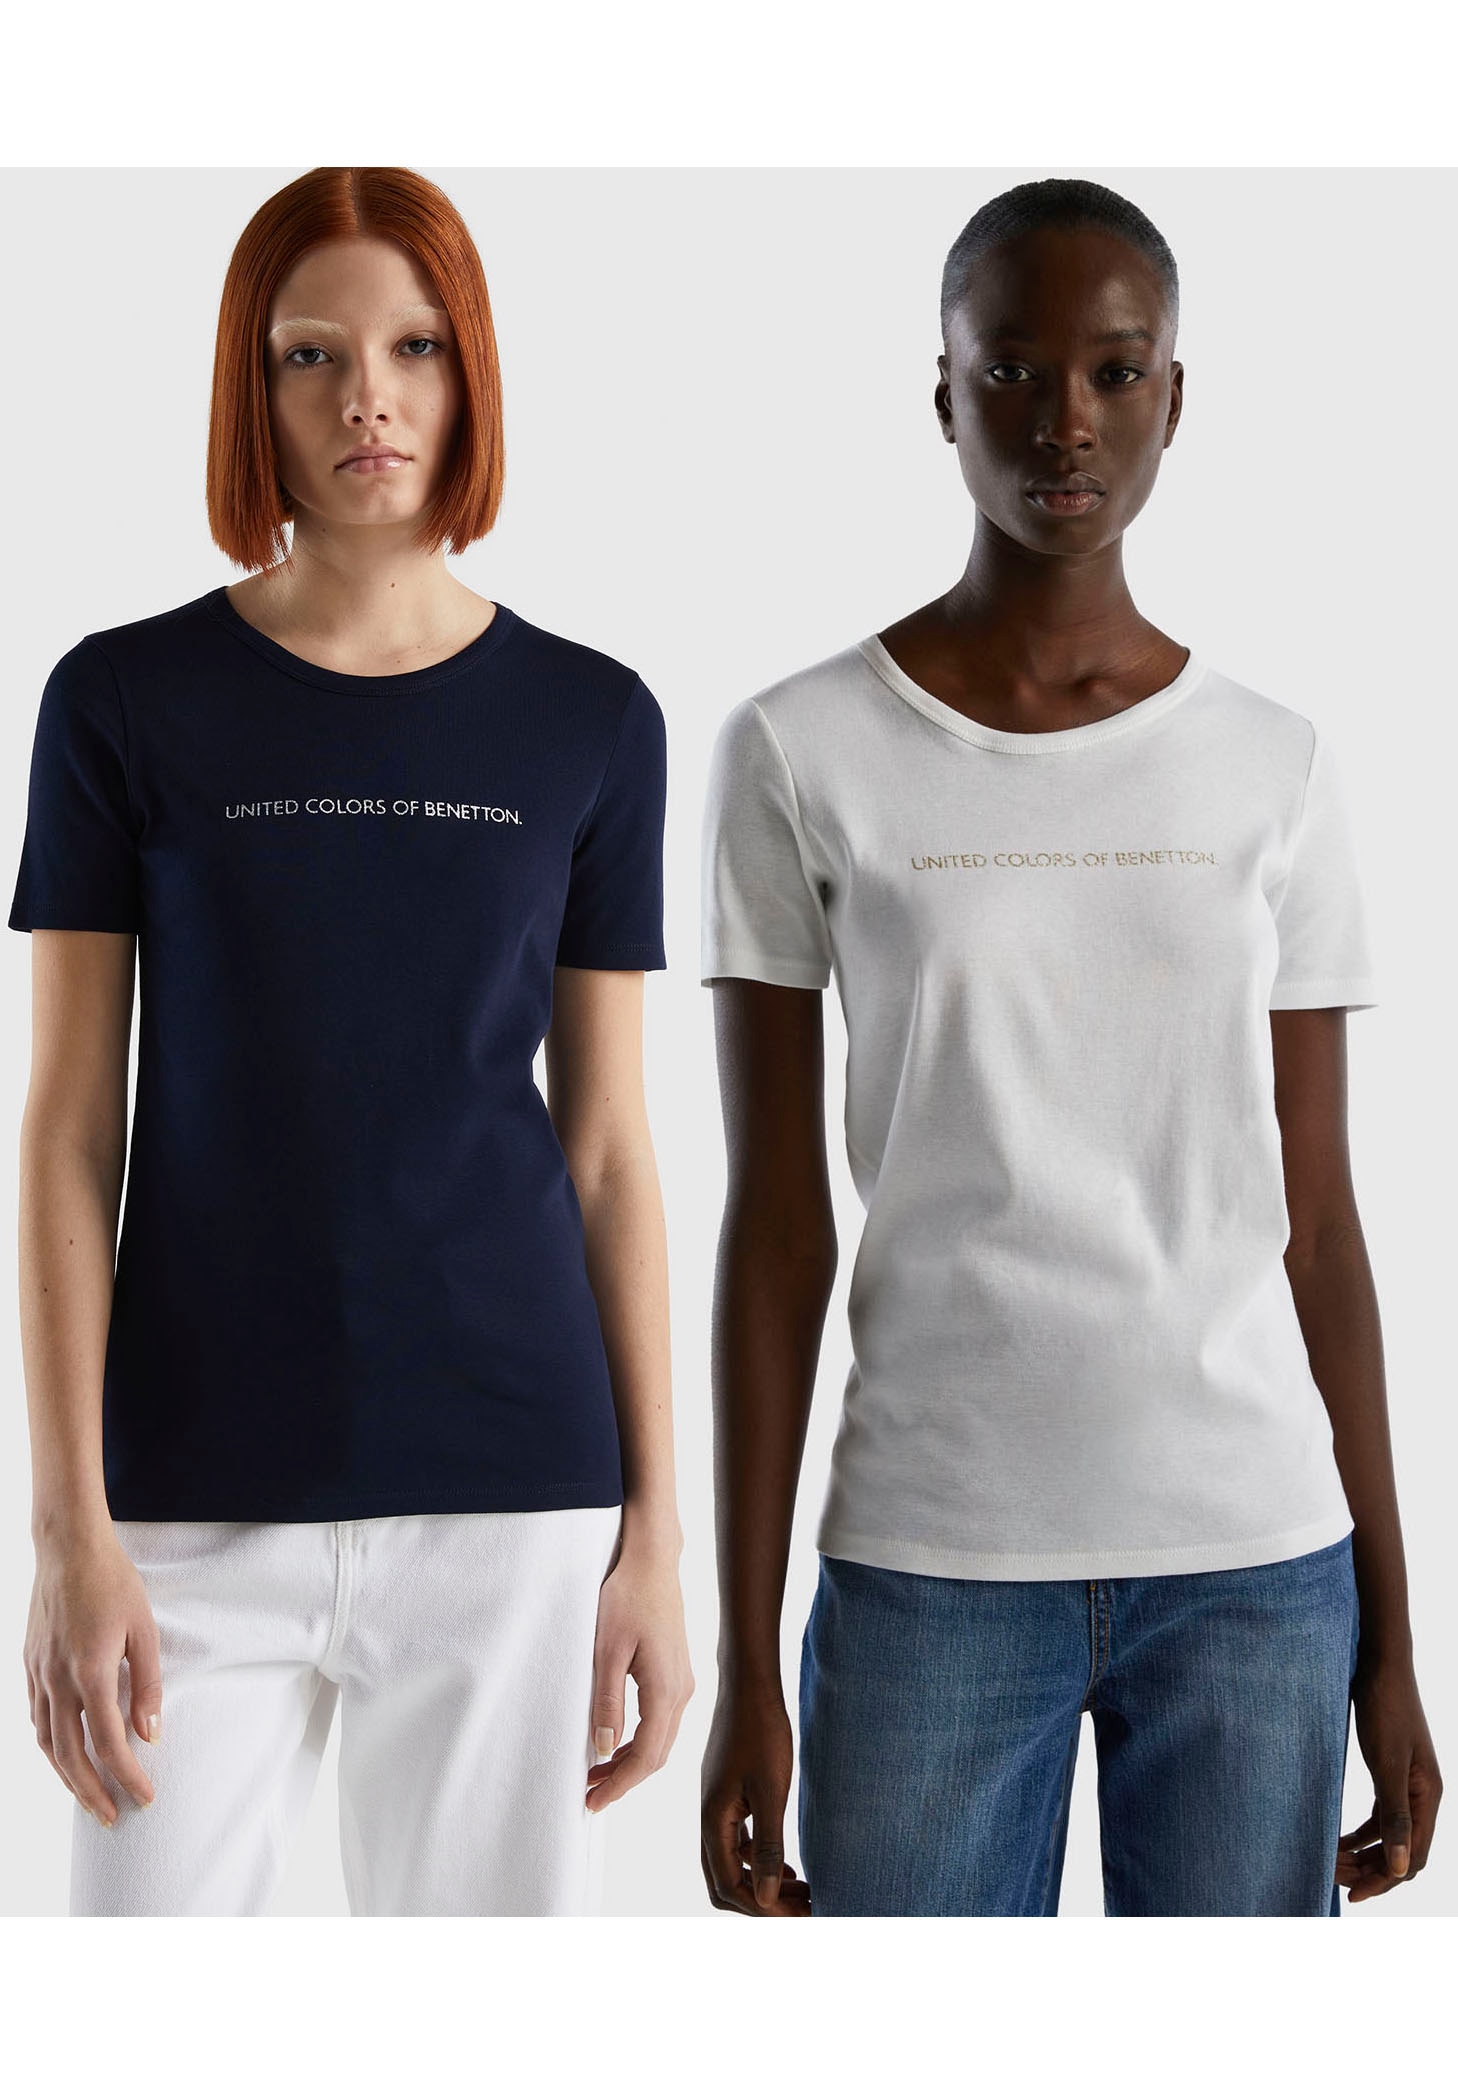 United Colors of tlg., | Doppelpack Bestseller (Set, 2), BAUR unsere Benetton bestellen T-Shirt, 2 im